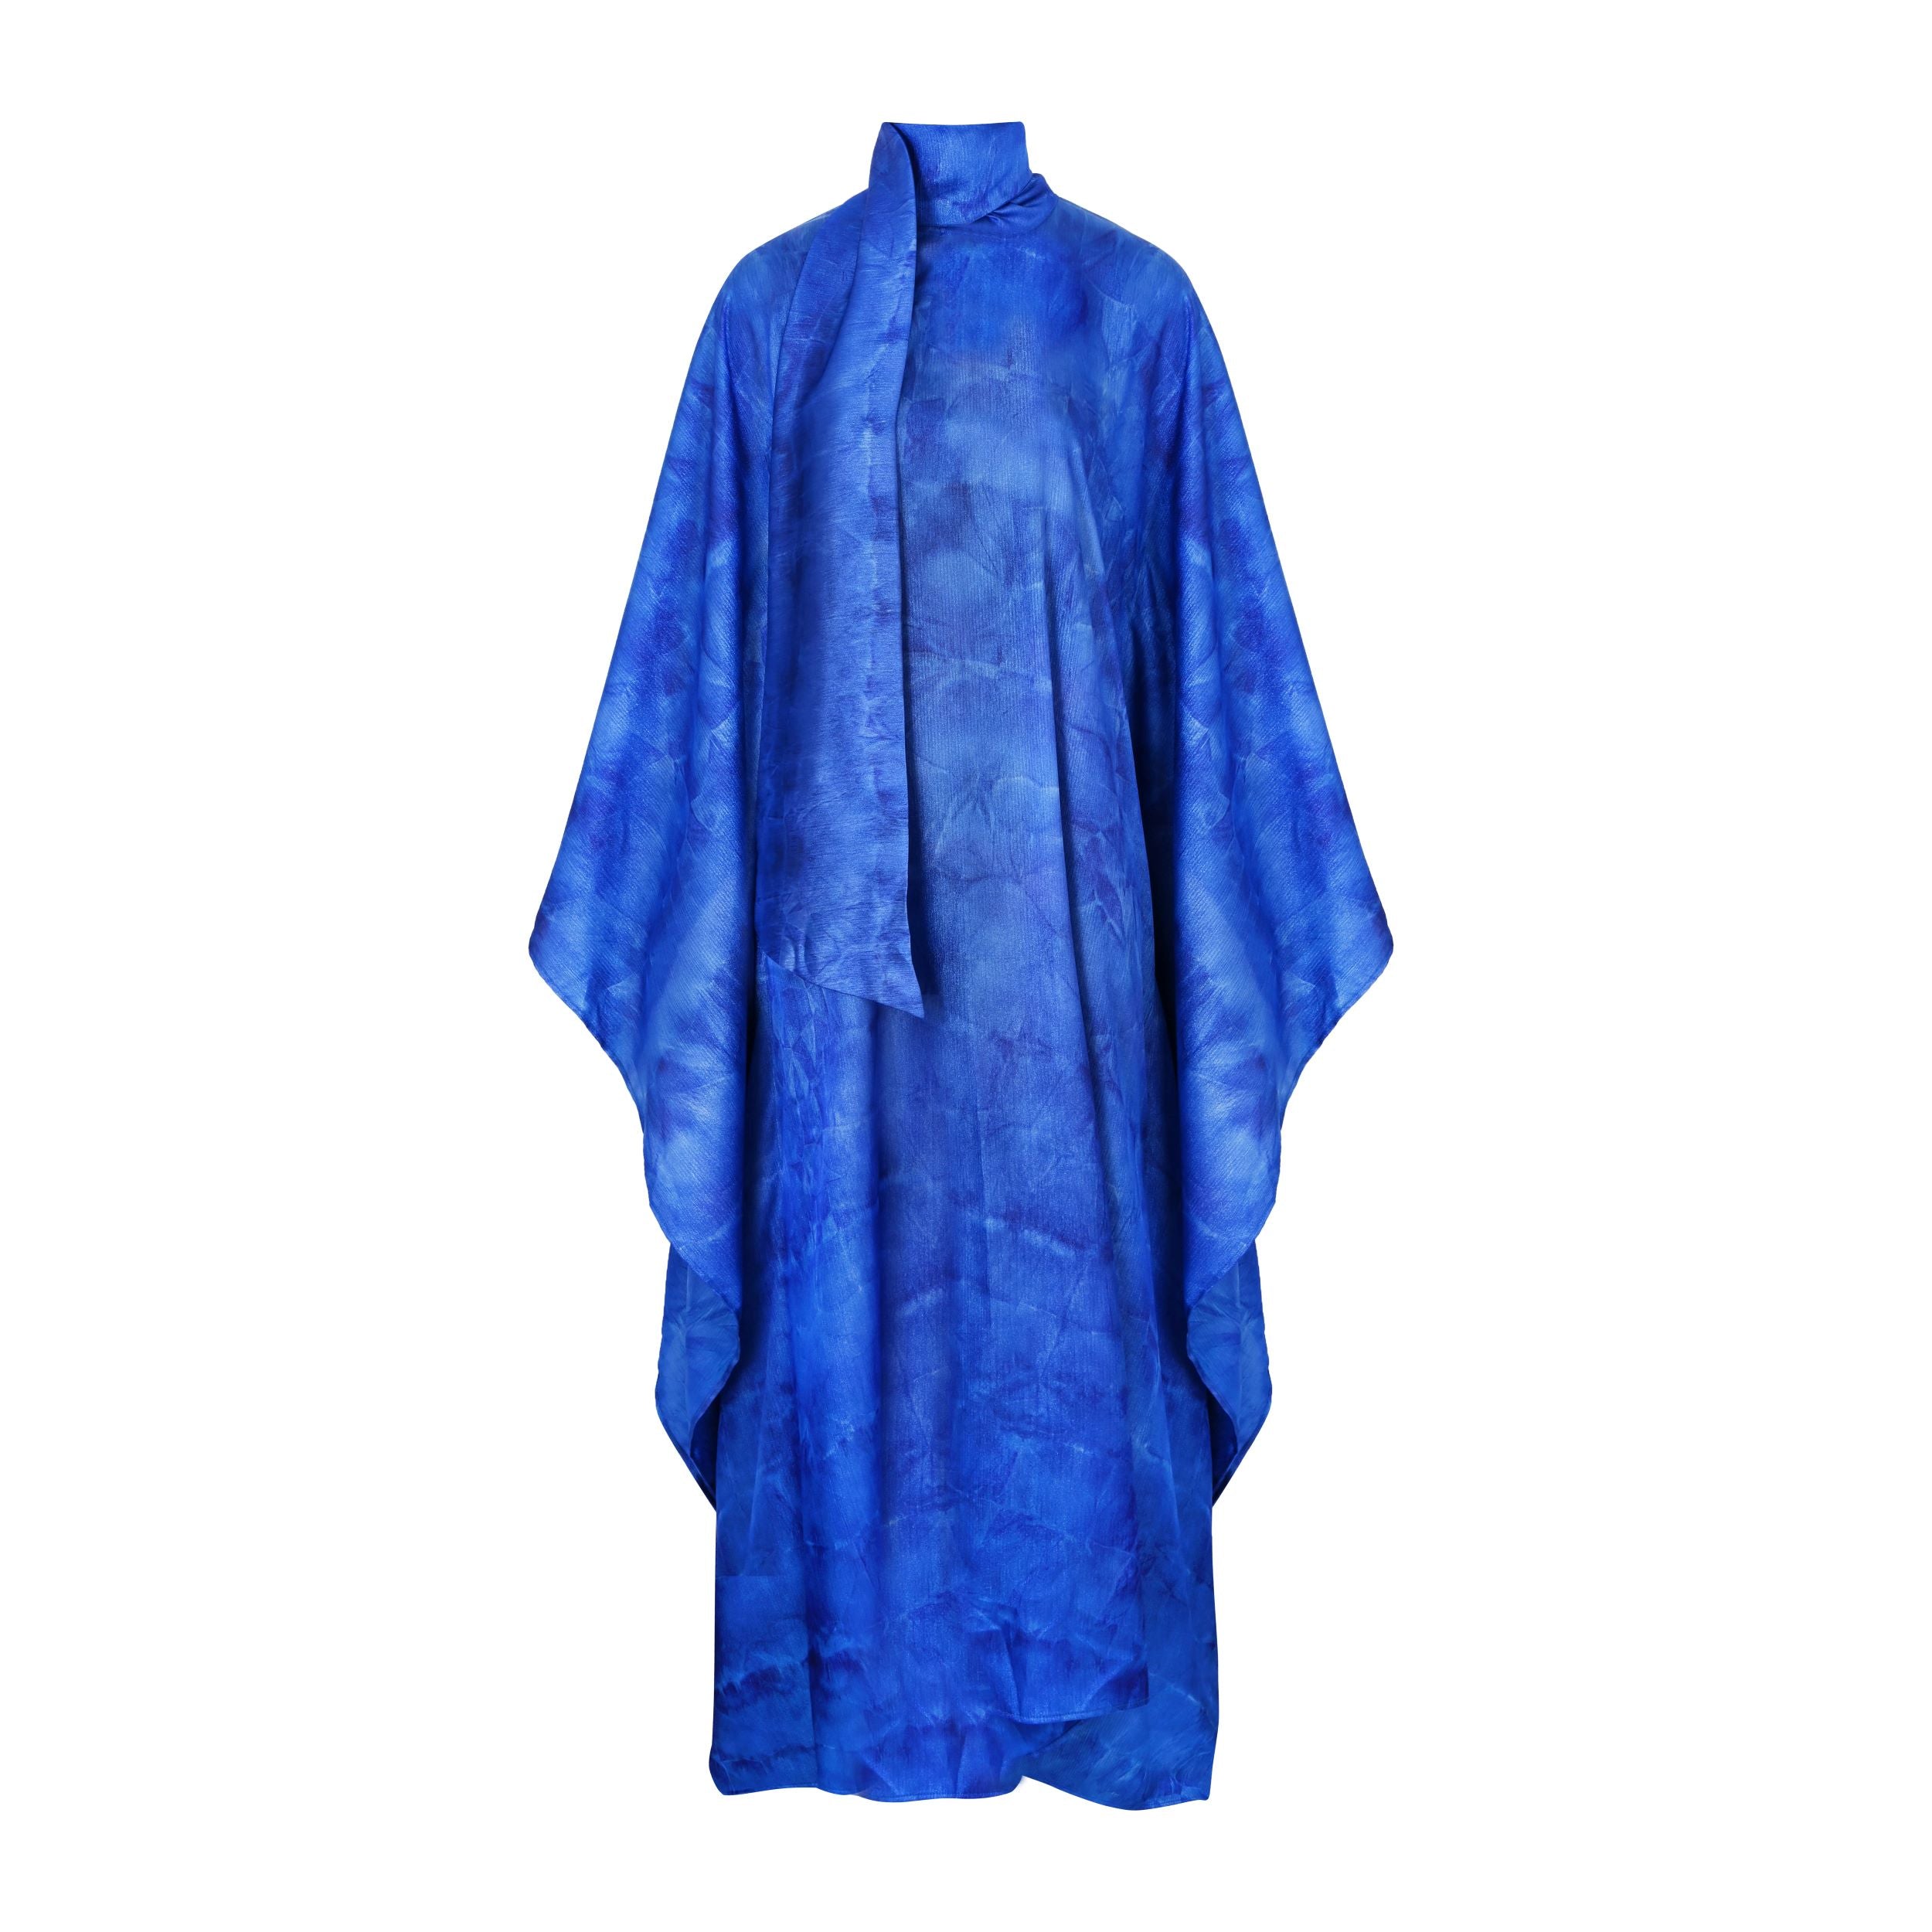 KATSUMI ELECTRIC BLUE PRINT KAFTAN DRESS